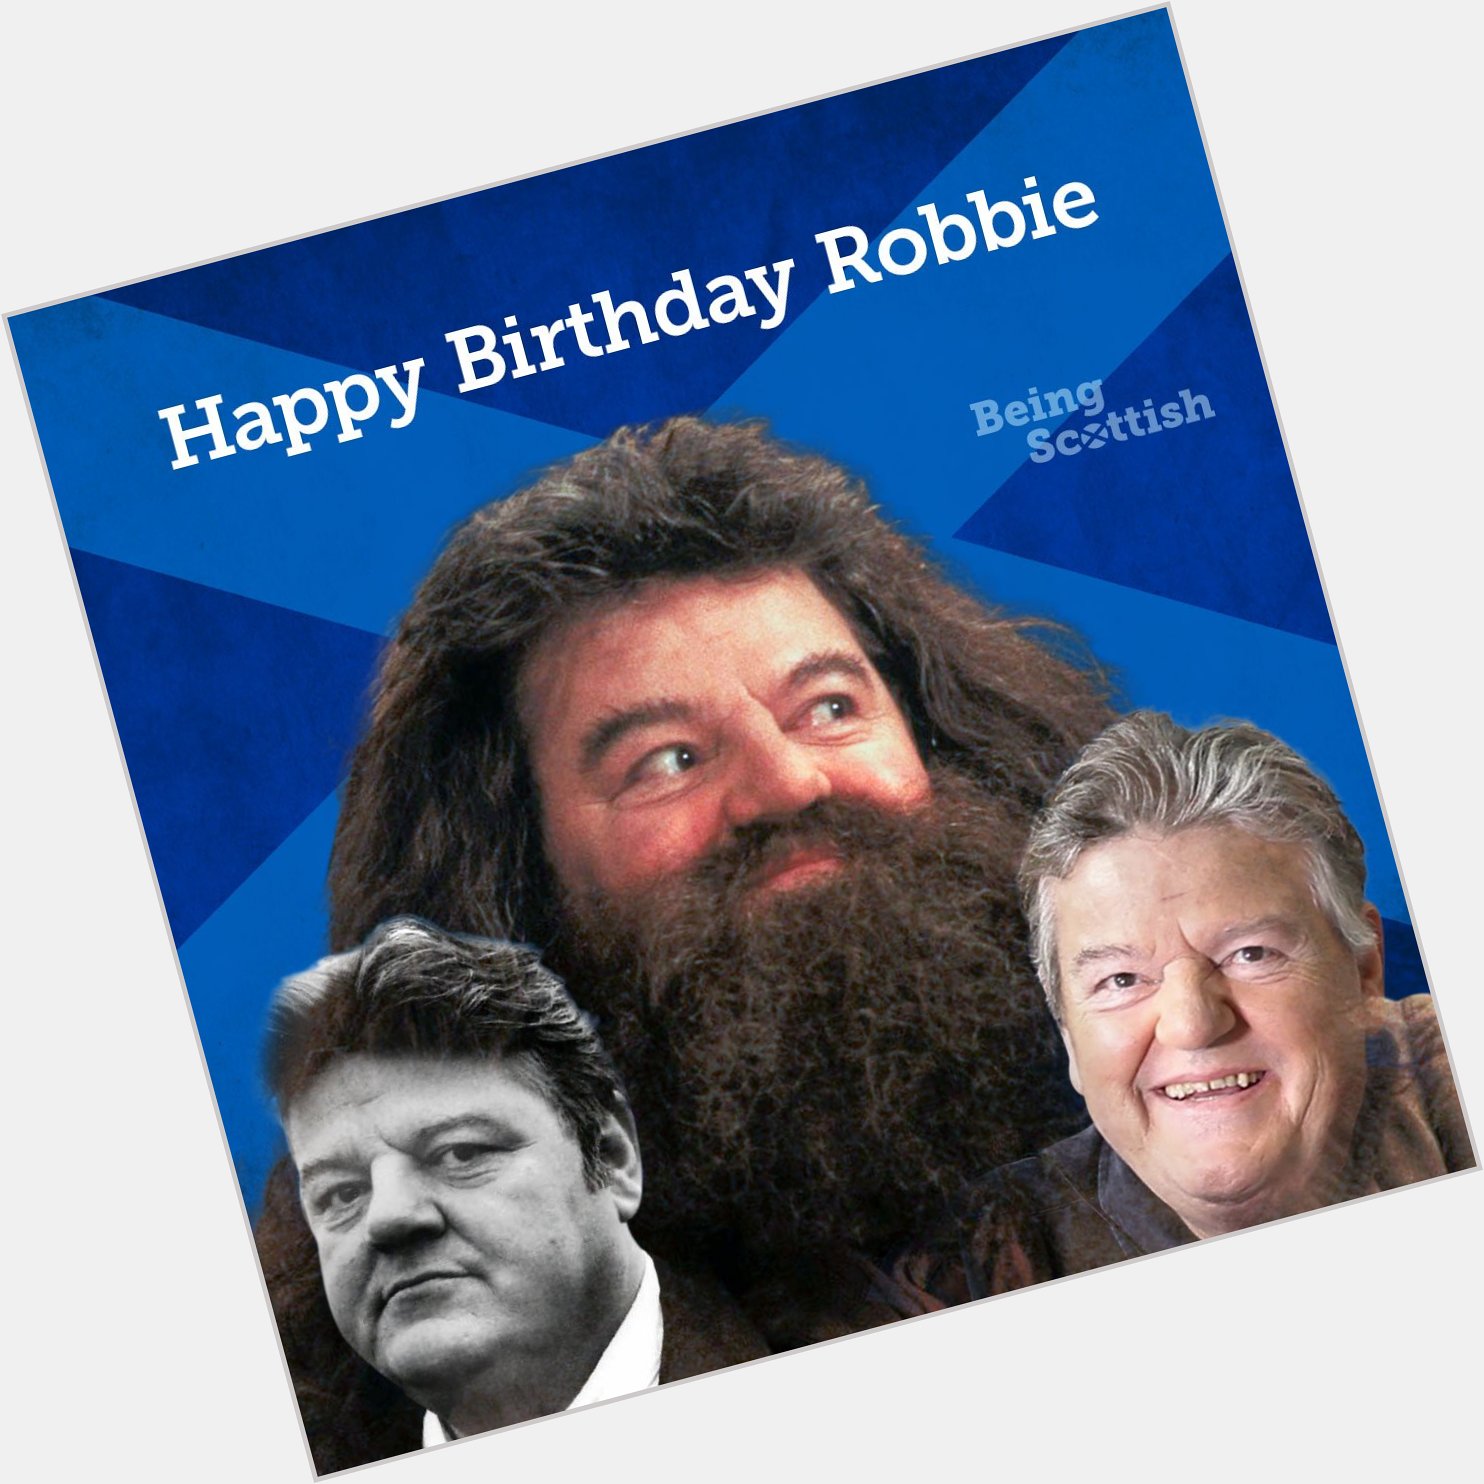 Happy birthday to Rutherglen-born actor Robbie Coltrane who is 67 today 